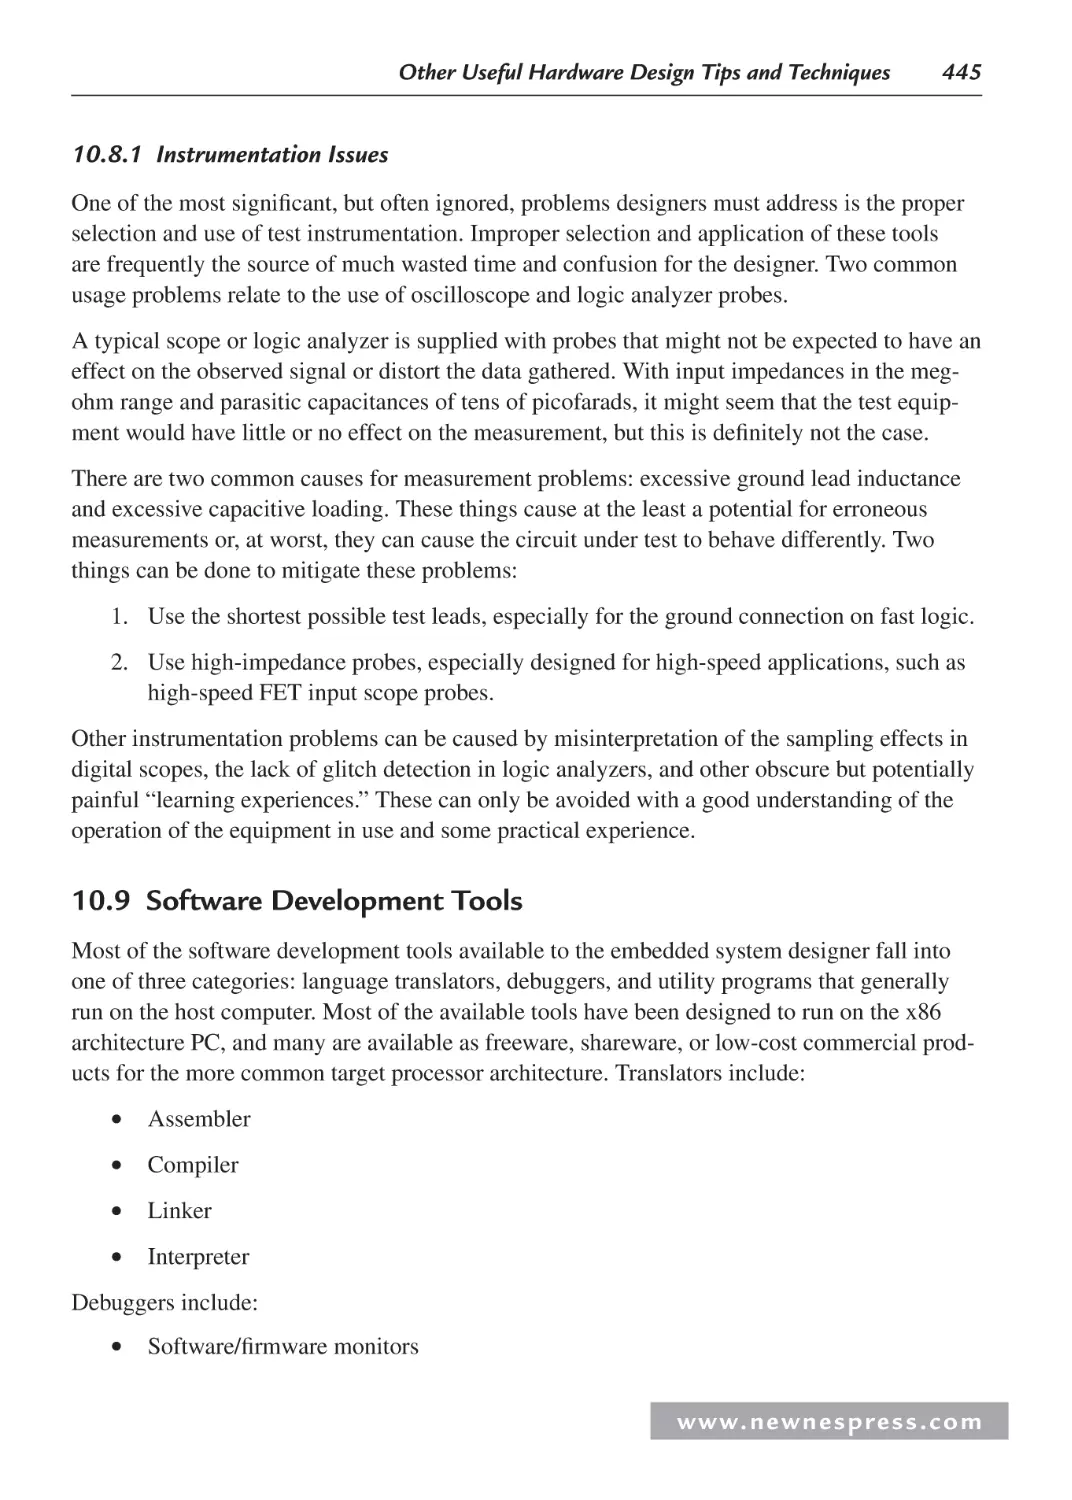 10.9 Software Development Tools